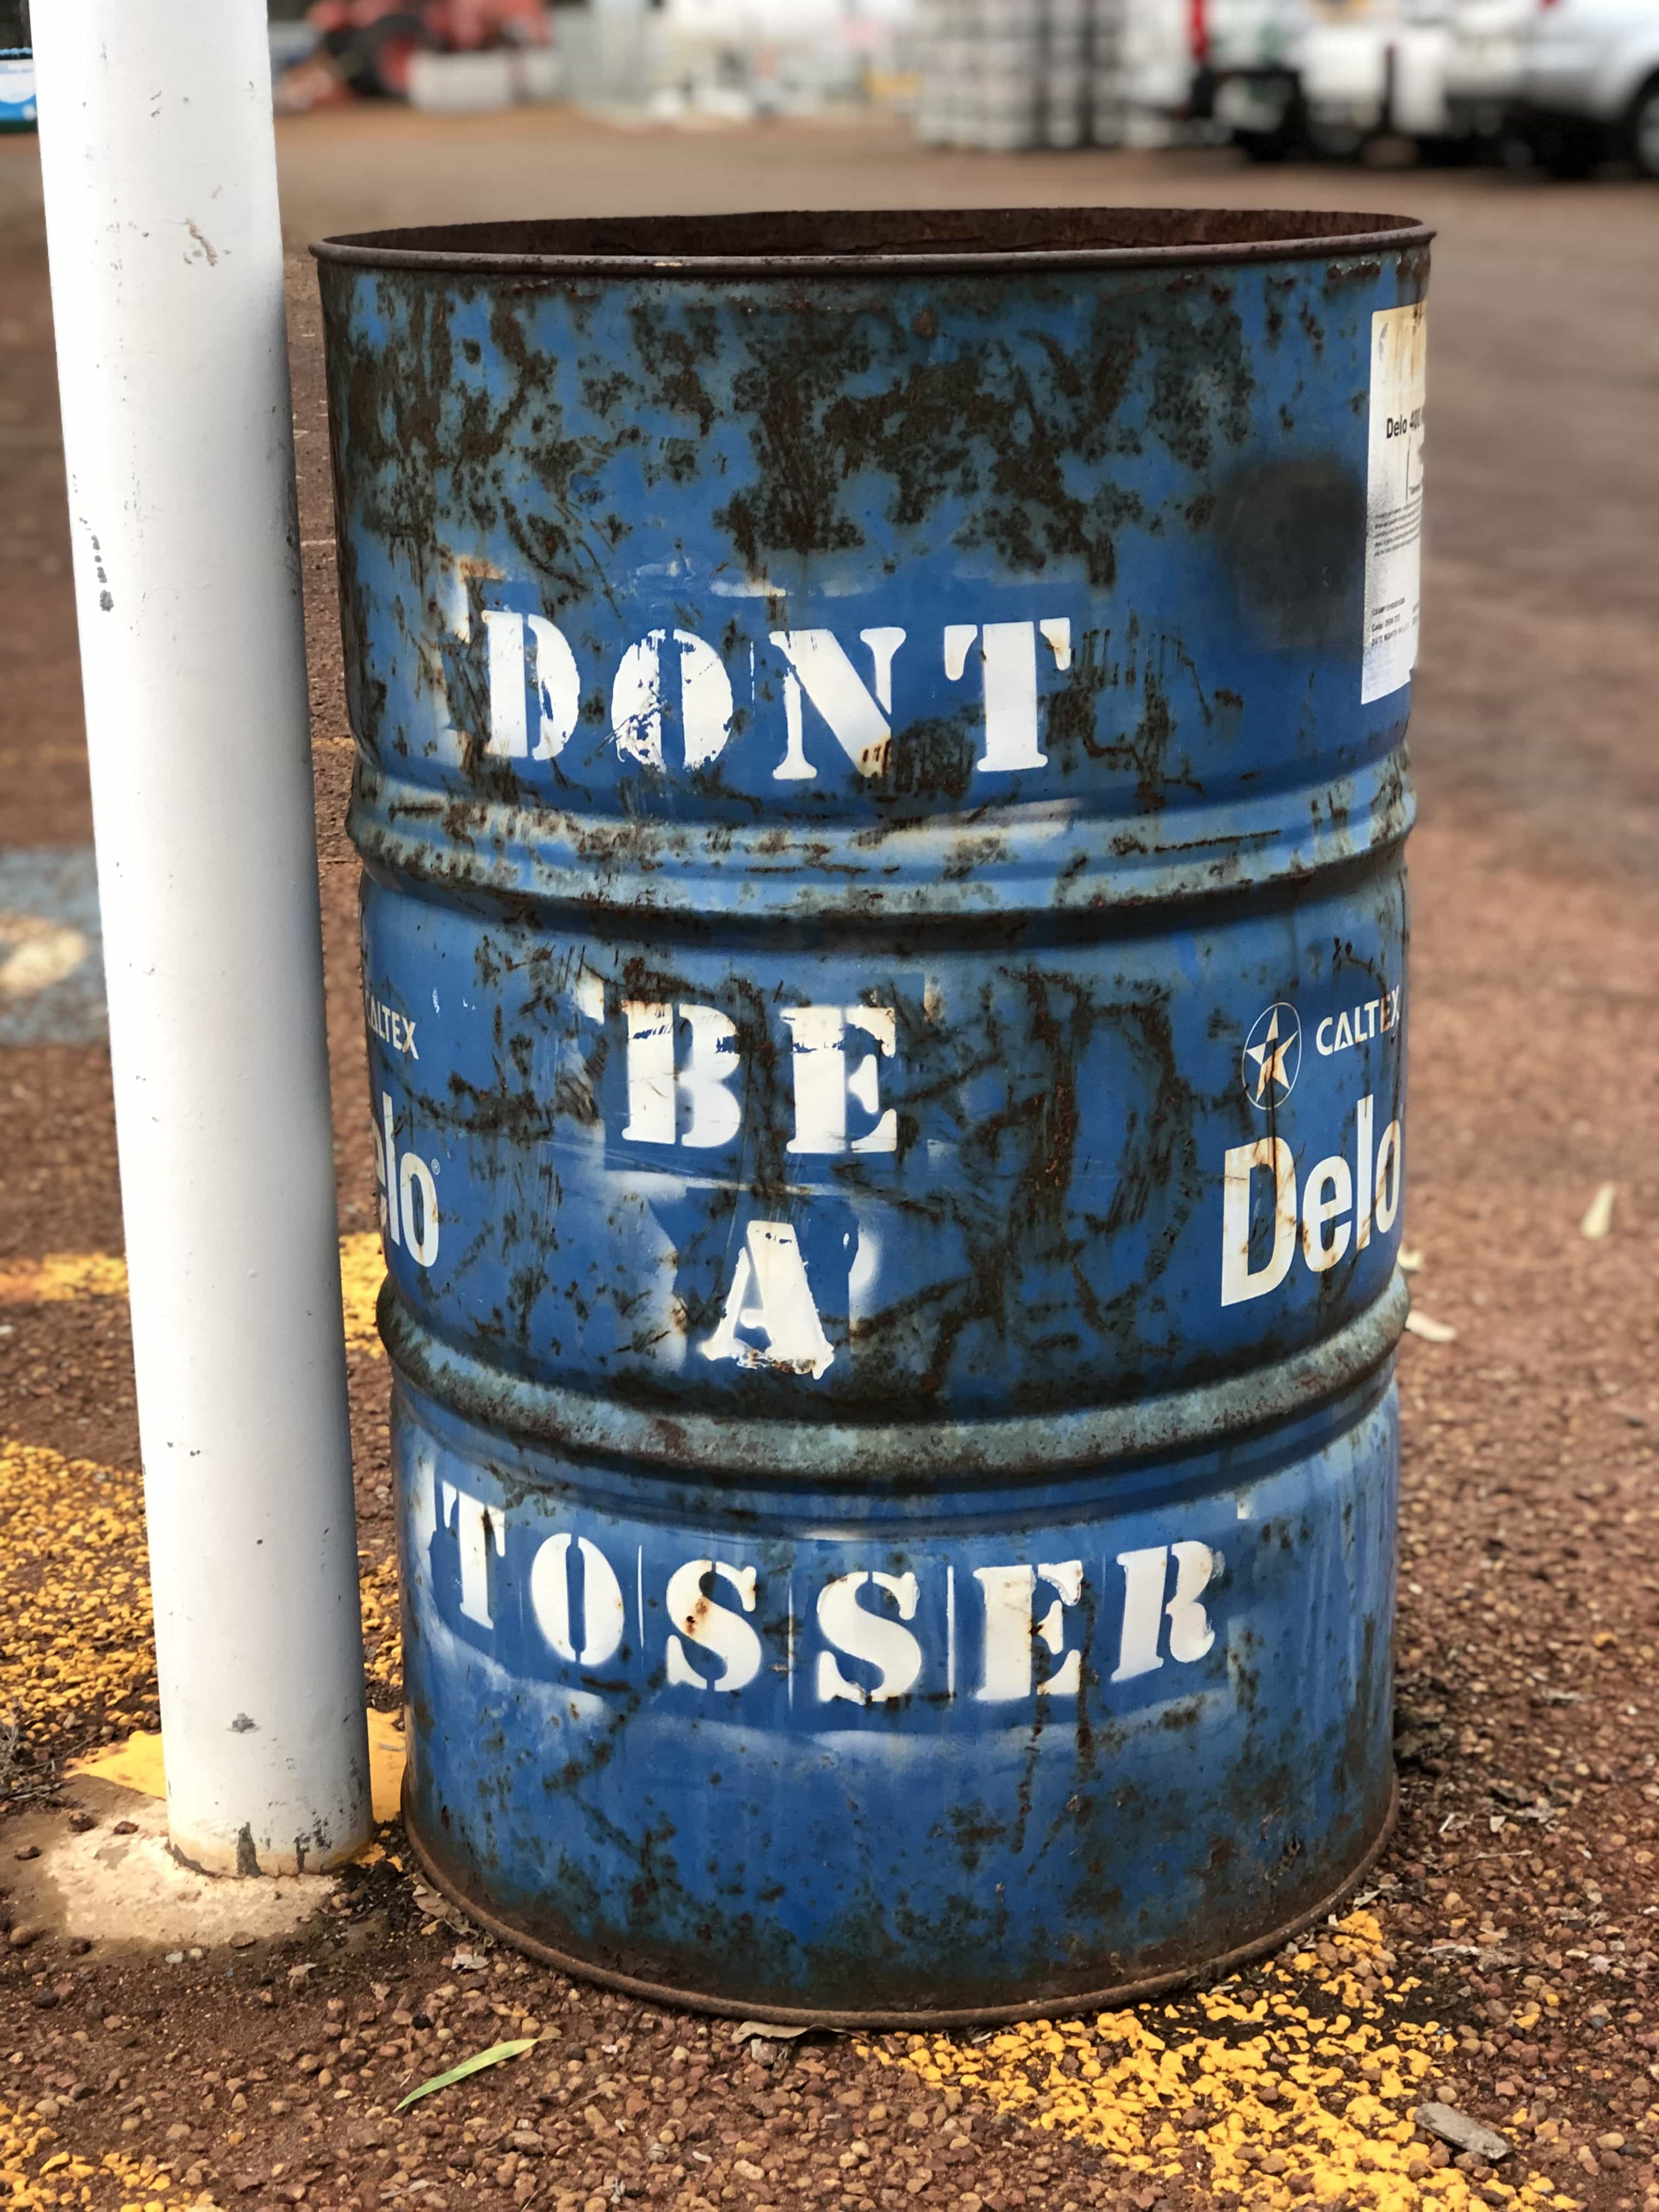 Don't be a tosser